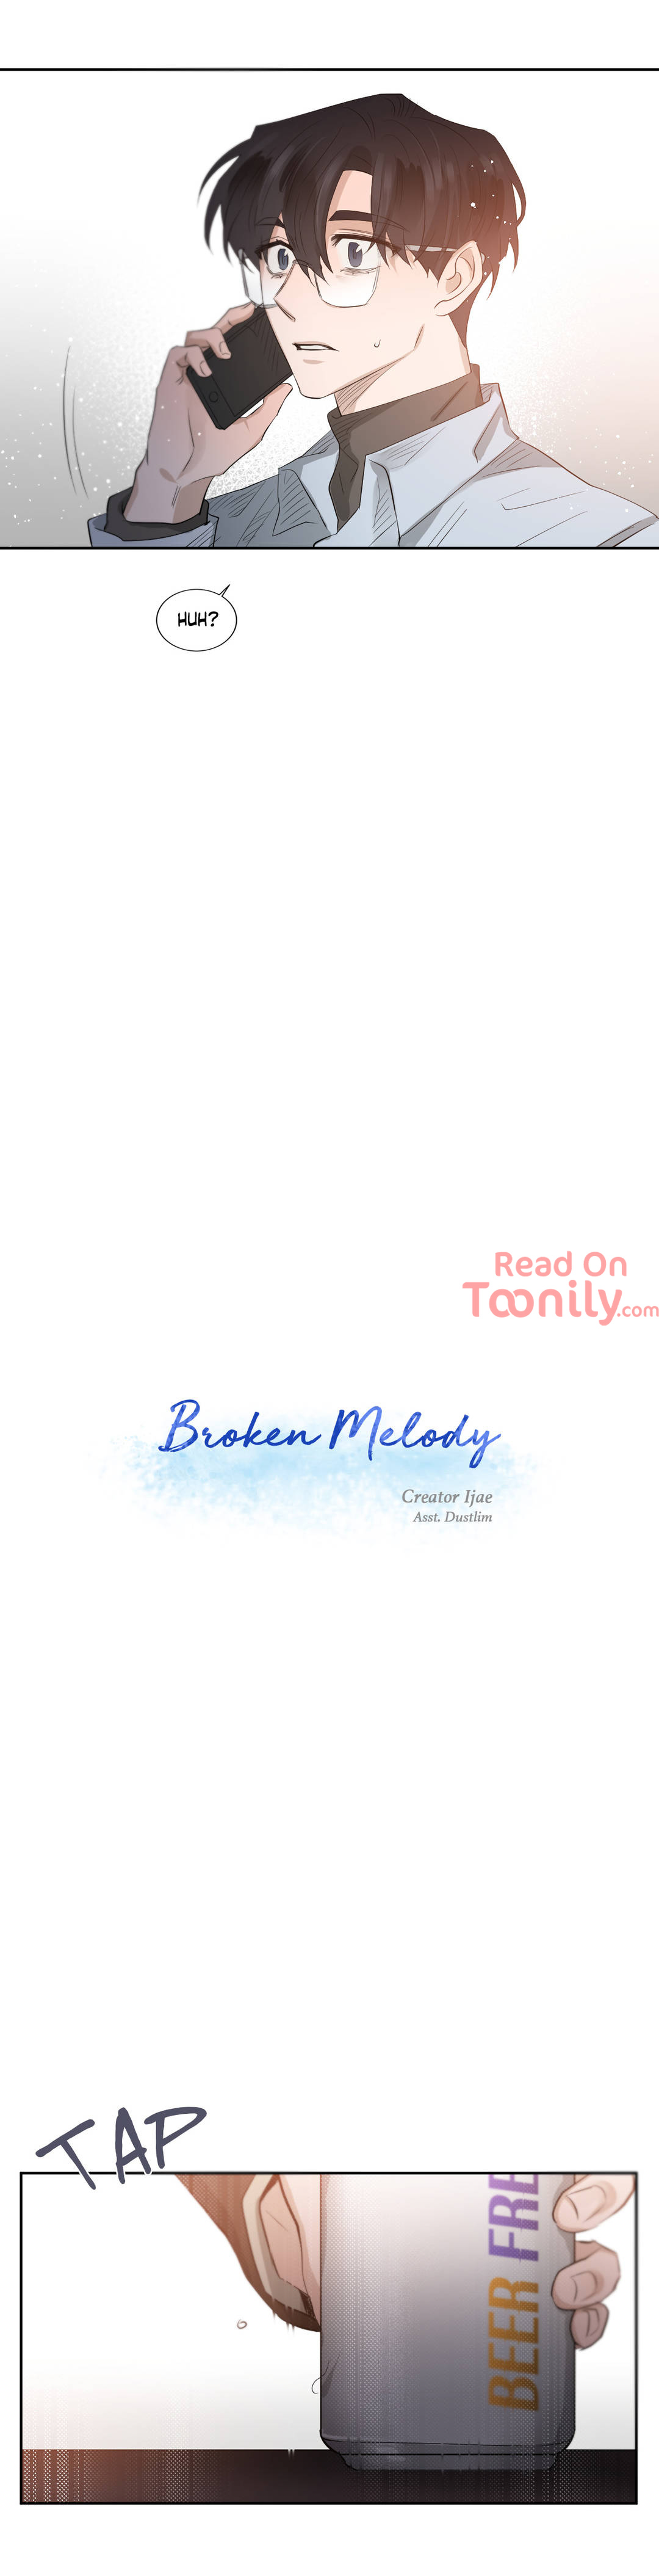 Broken Melody image